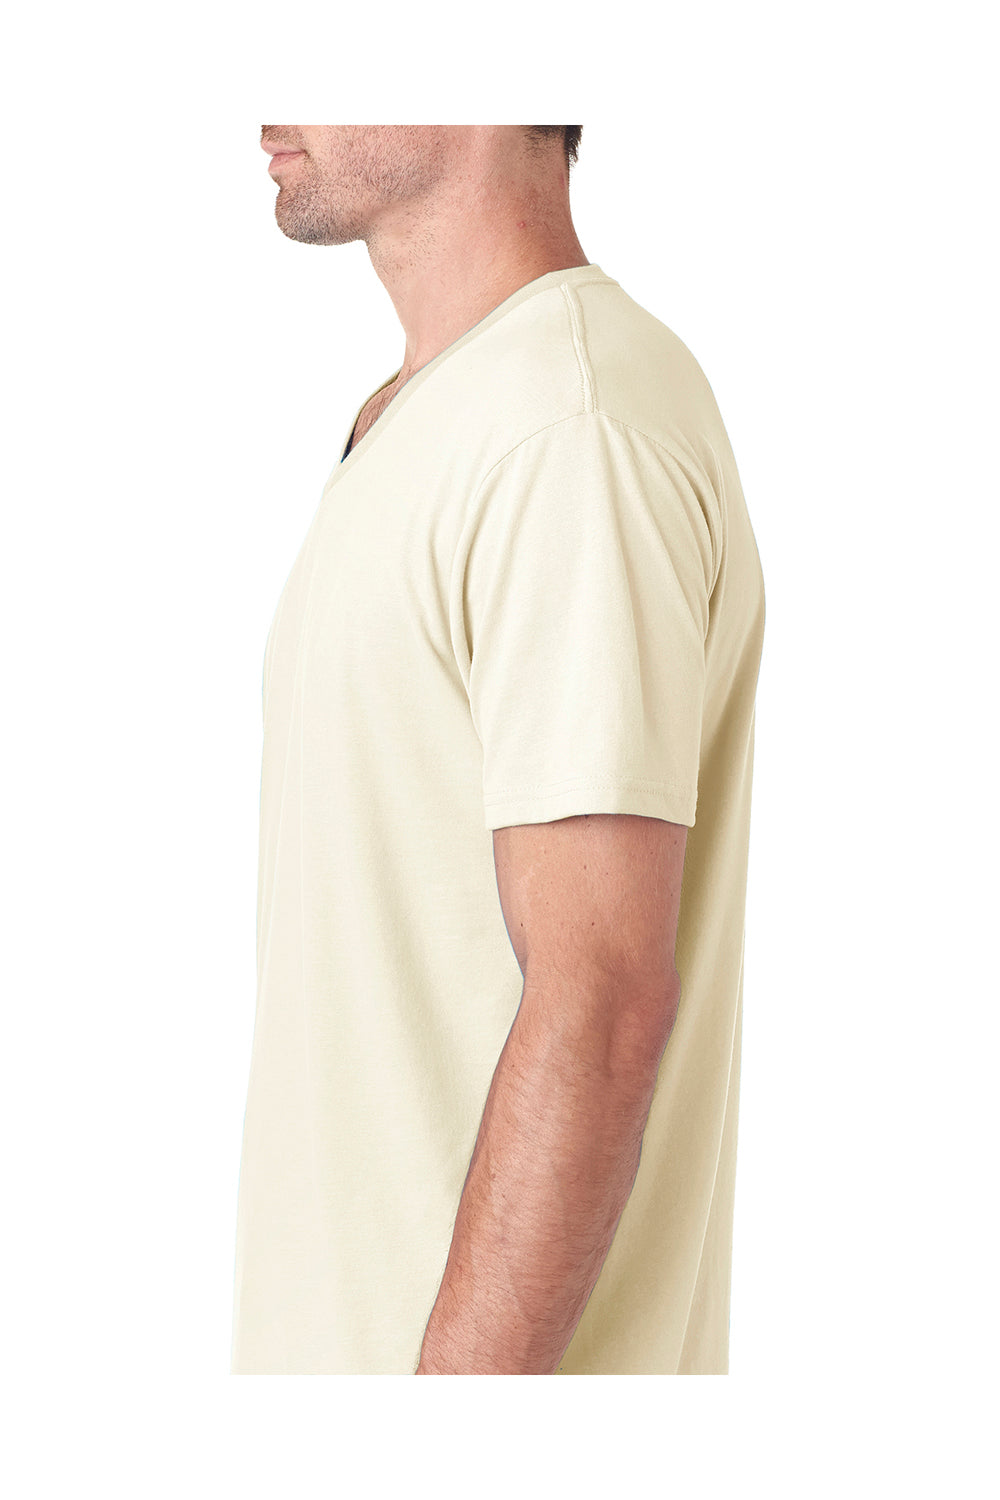 Next Level 6440 Mens Sueded Jersey Short Sleeve V-Neck T-Shirt Natural Side